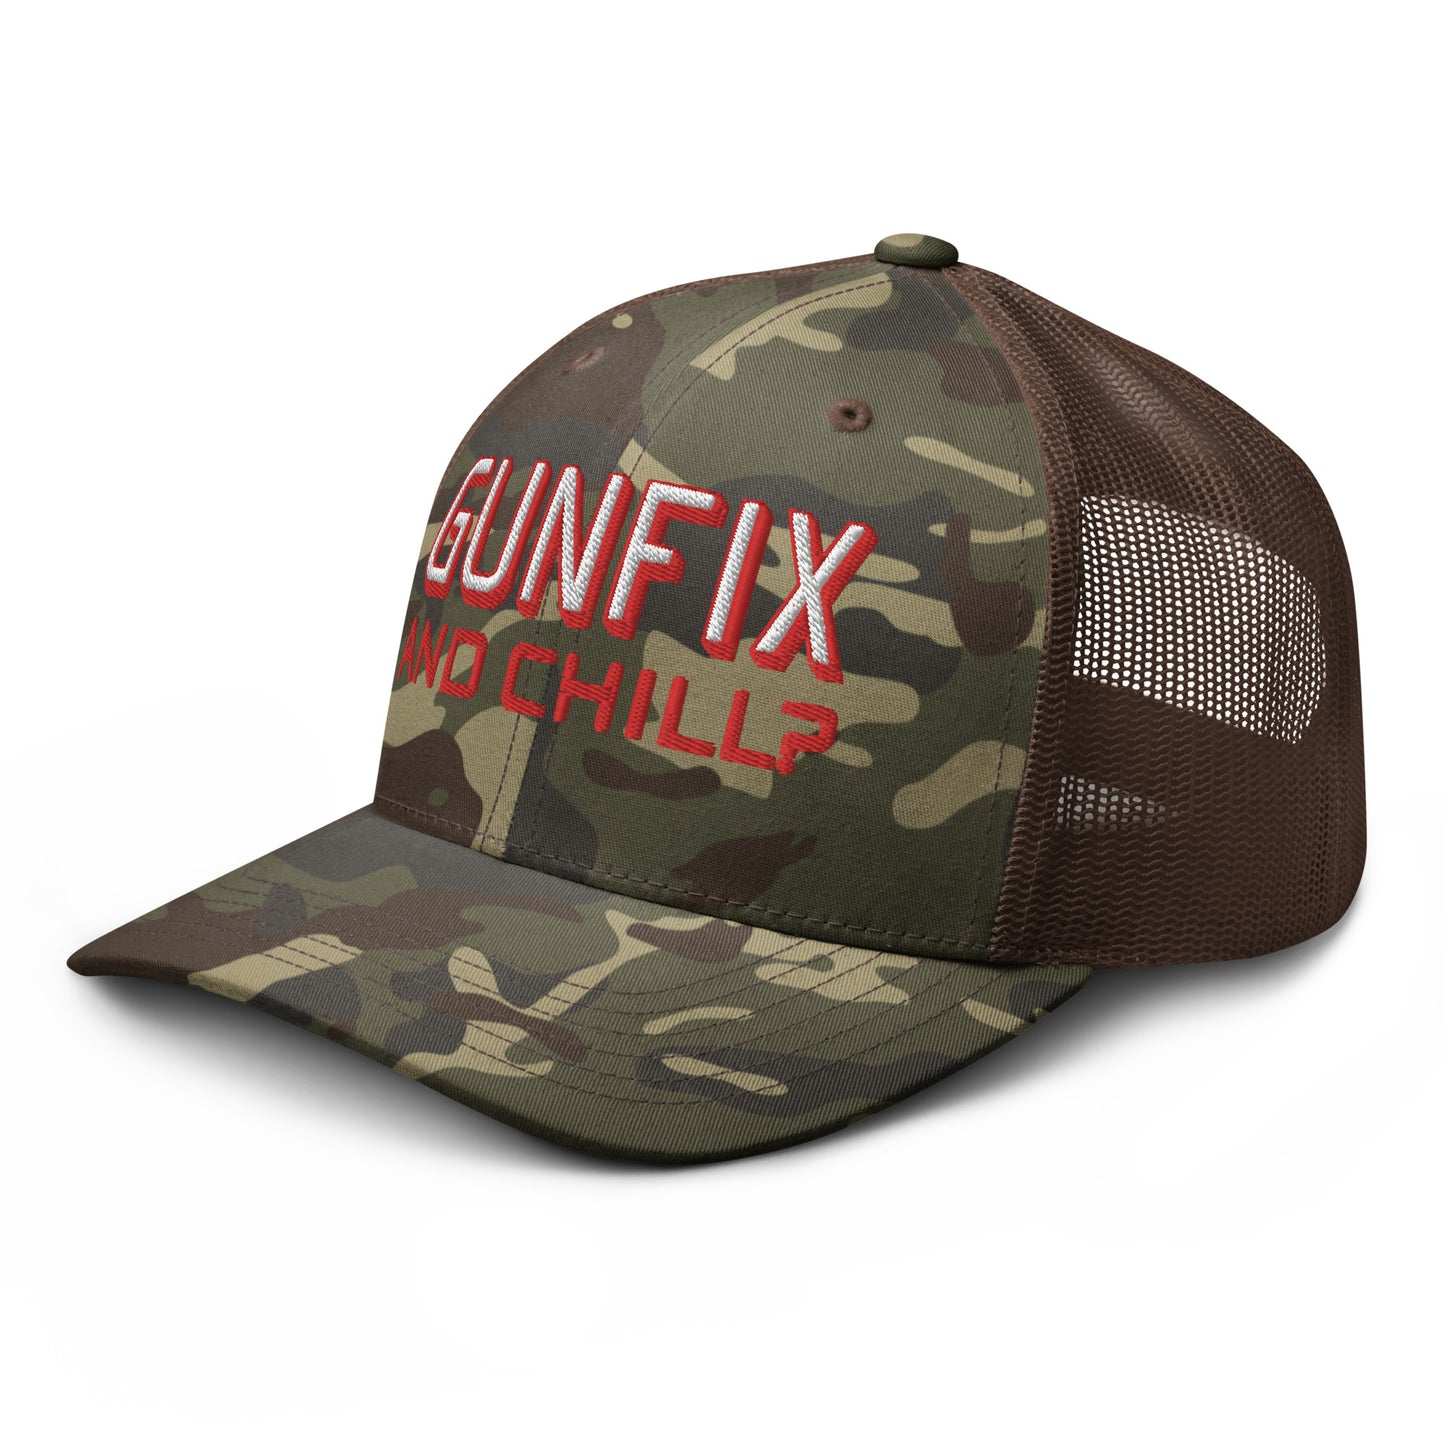 GUNFIX AND CHILL? Camouflage trucker hat